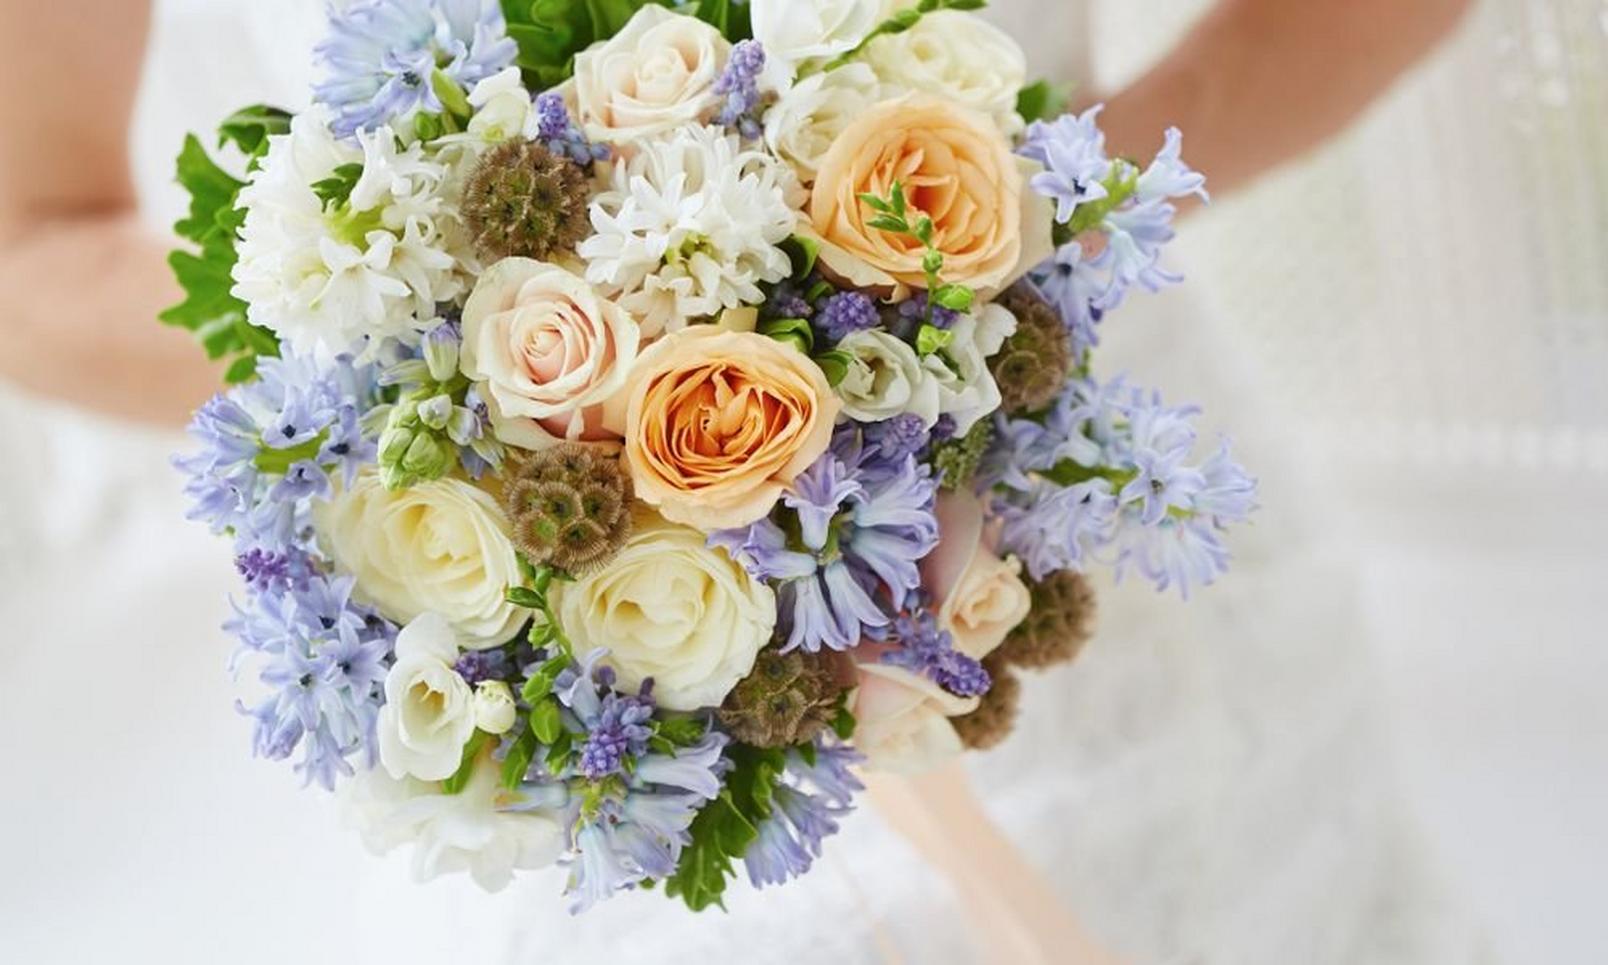 Popular Picks for Wedding Bouquets